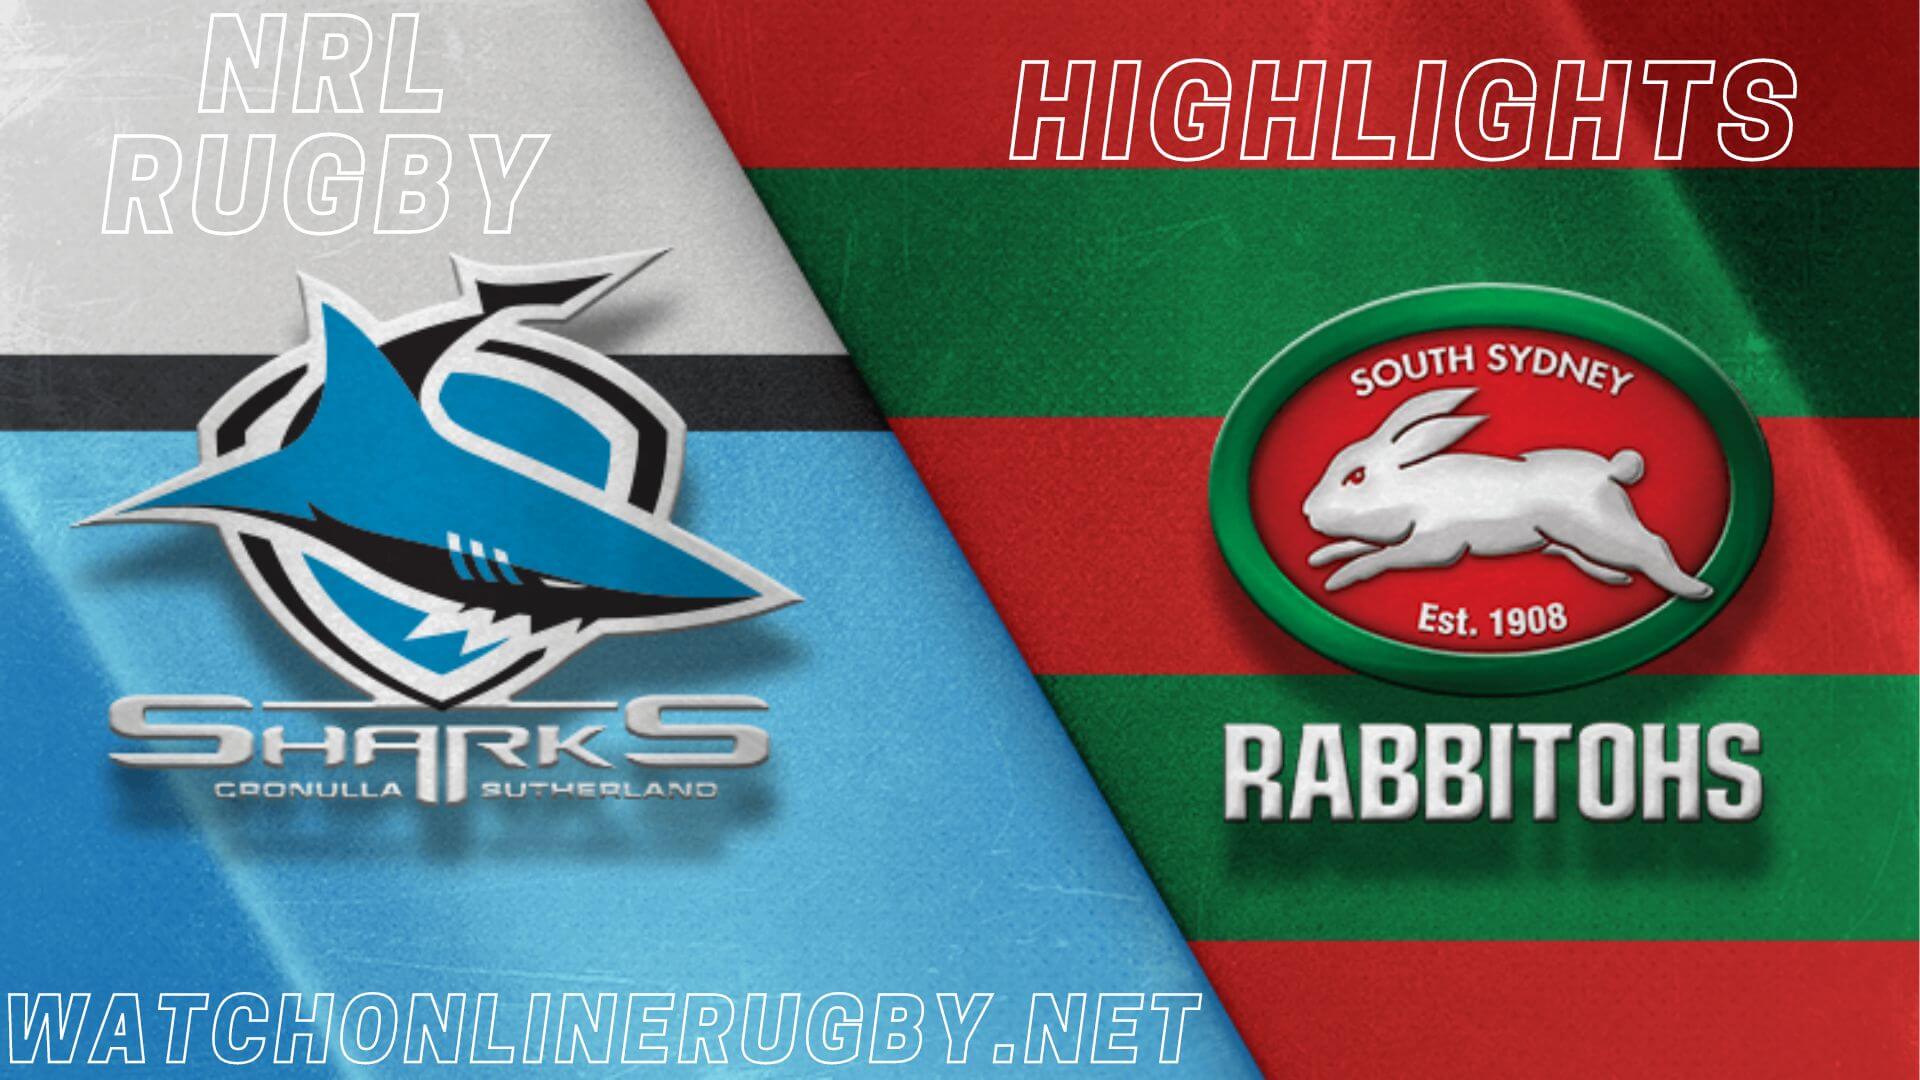 Sharks Vs Rabbitohs Highlights RD 20 NRL Rugby